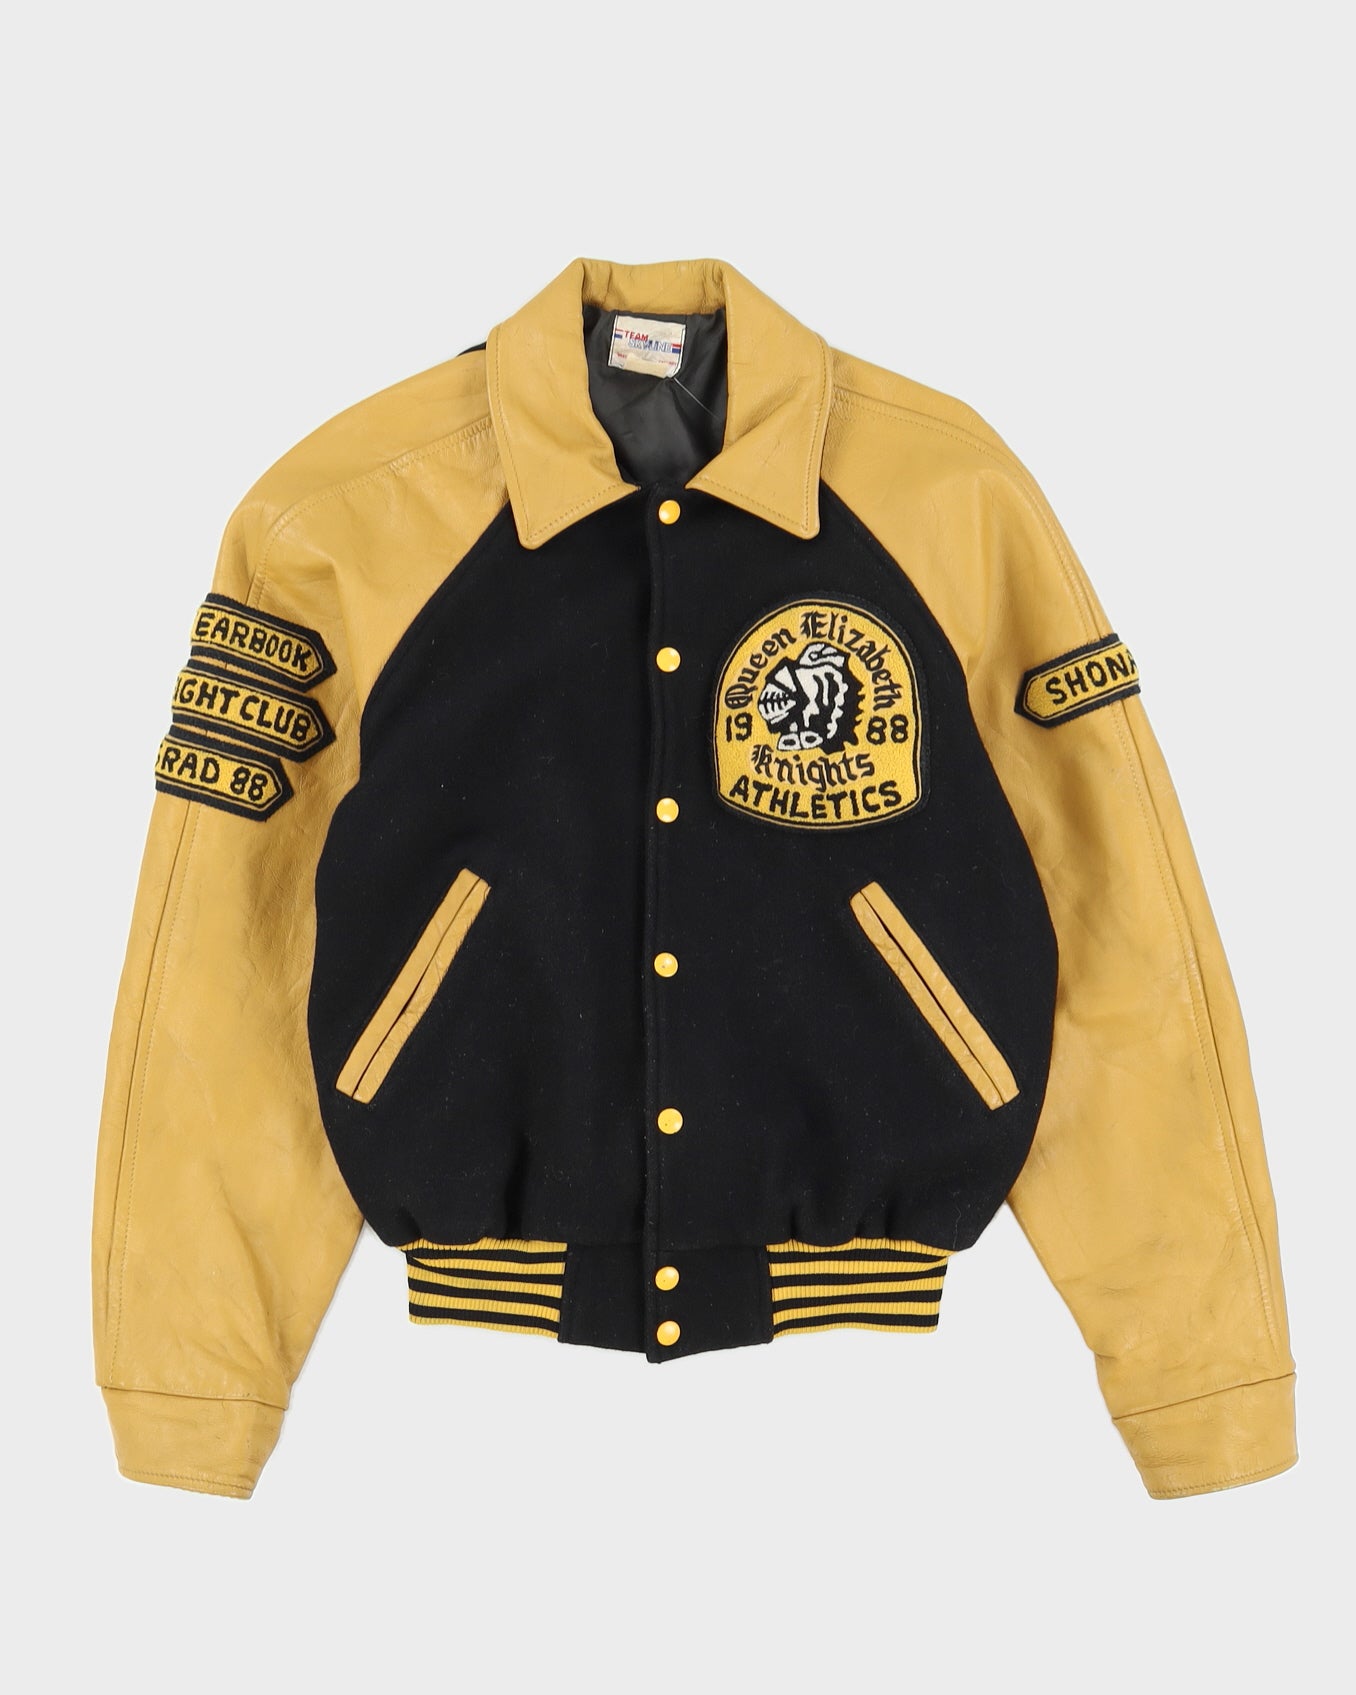 The Men’s Emma Stone Louis Vuitton Yellow Varsity Jacket